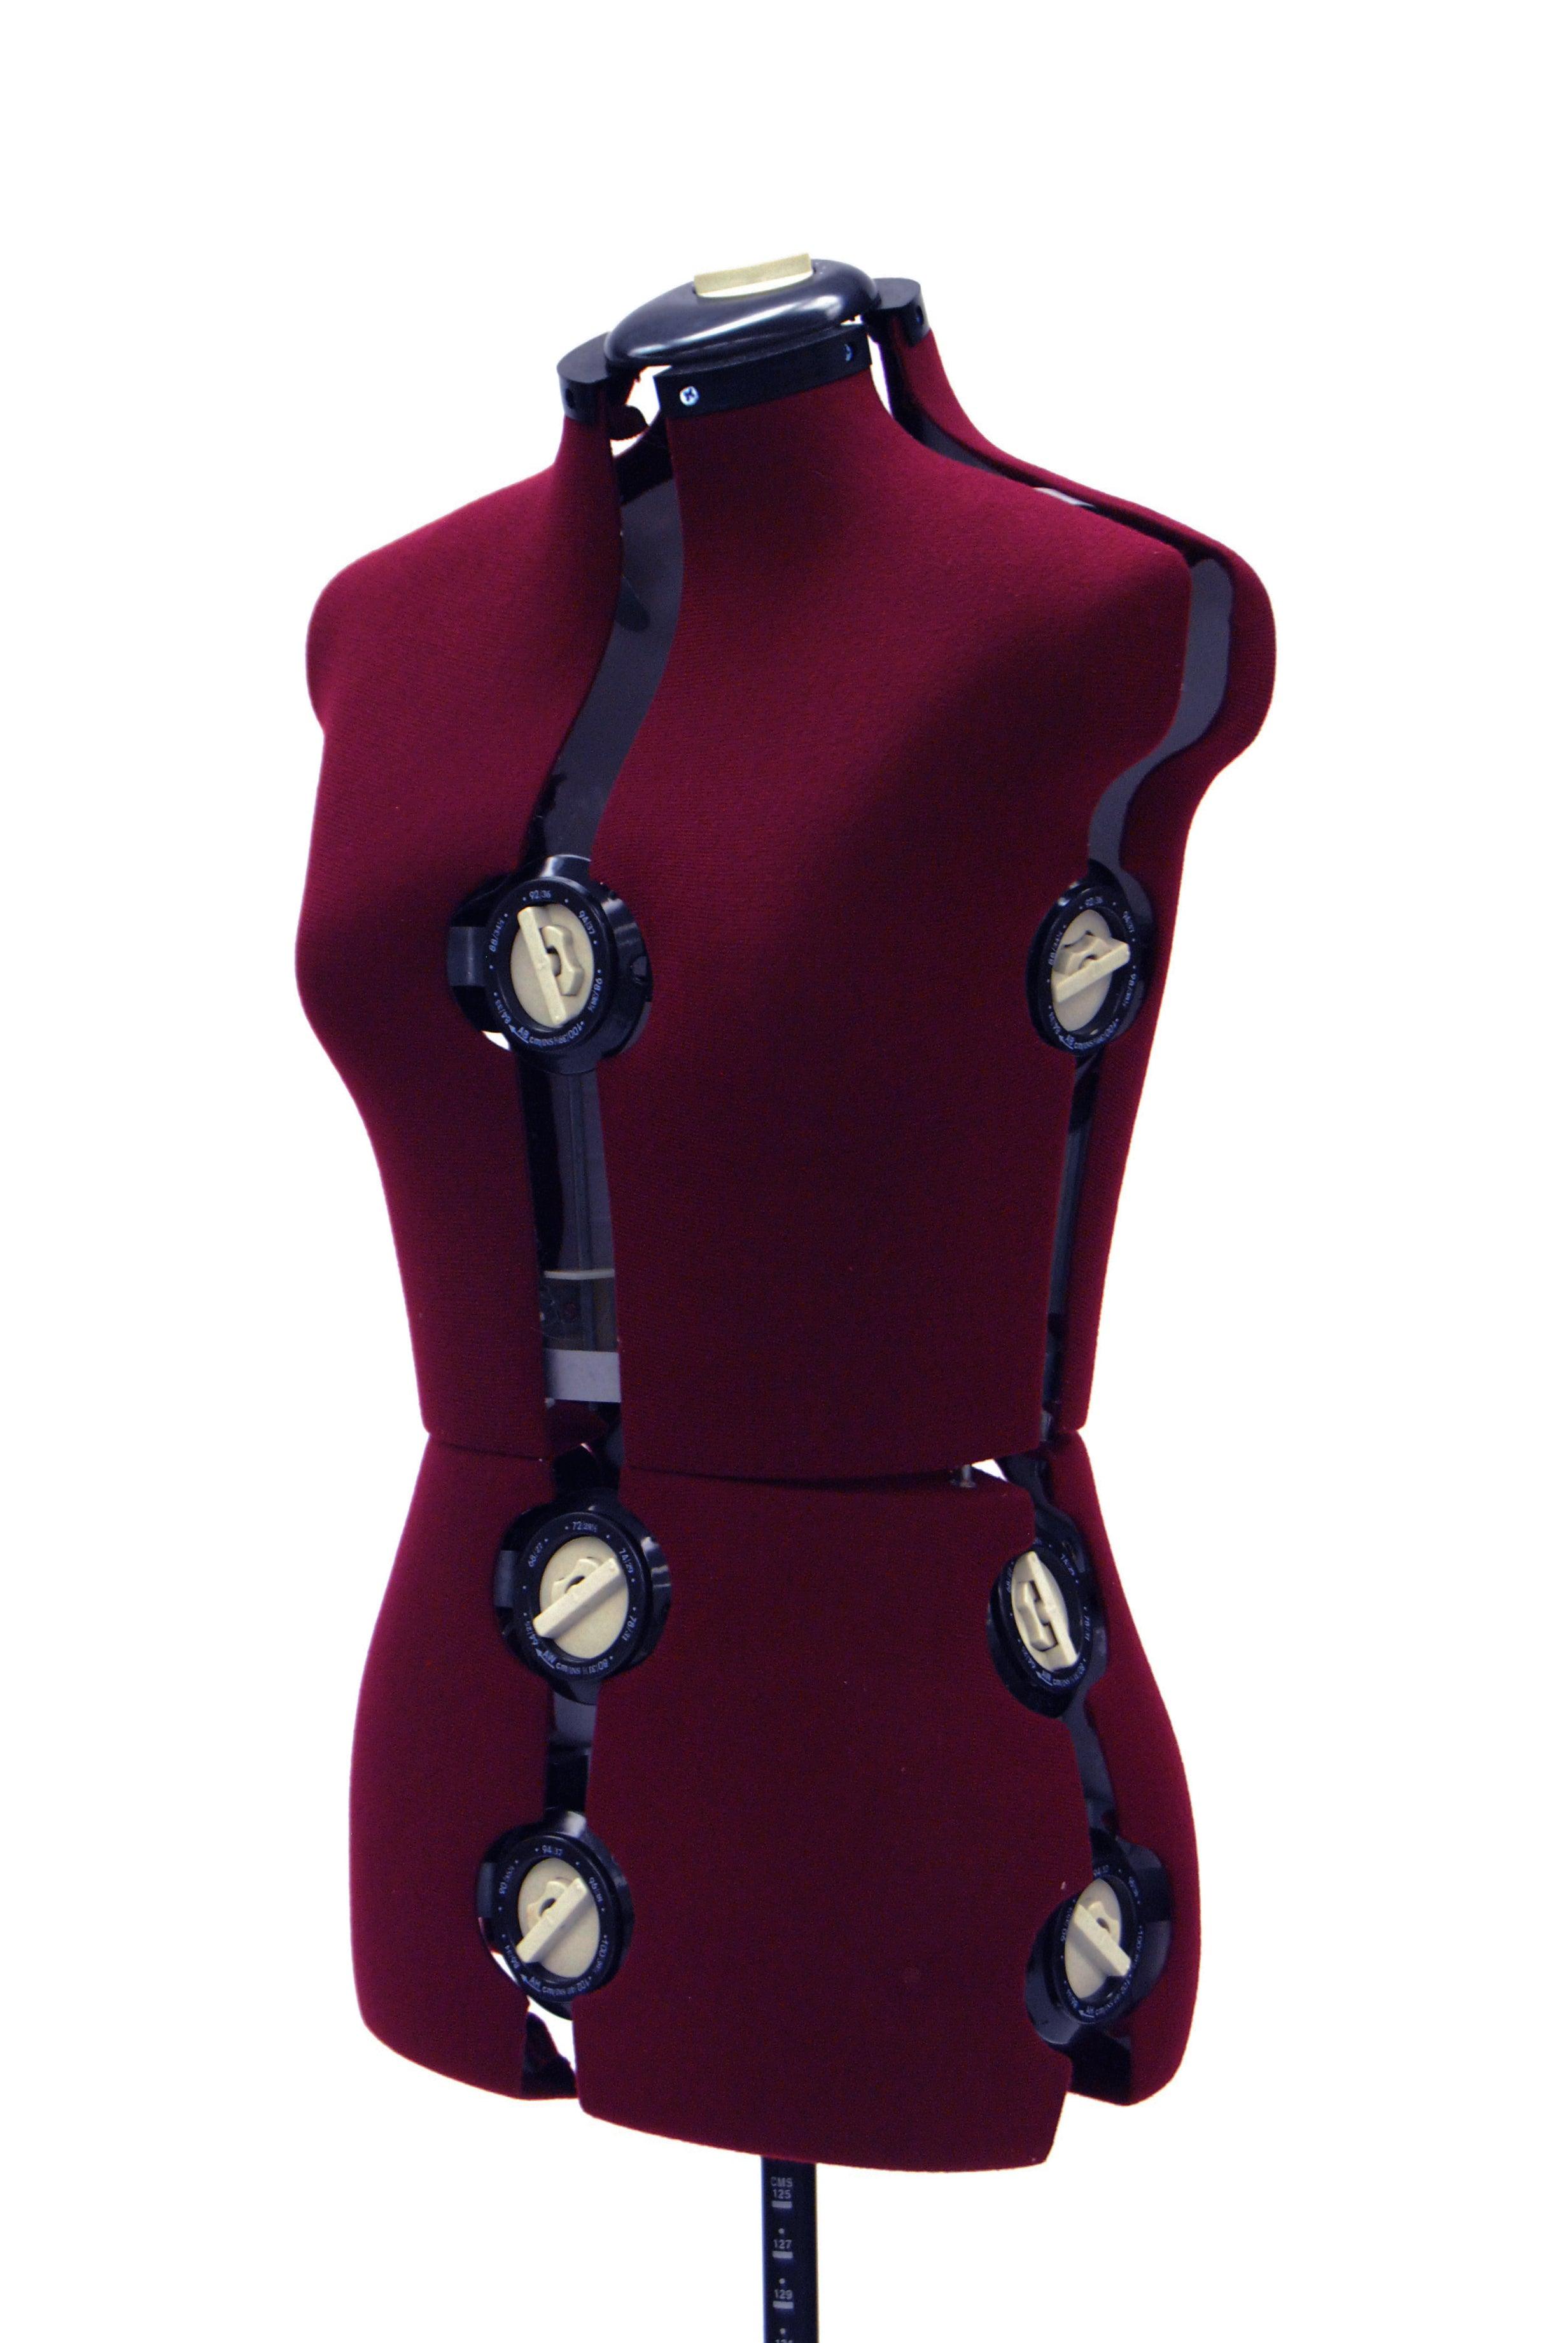 Adult Female Plus Size Adjustable Dress Form Sewing Mannequin